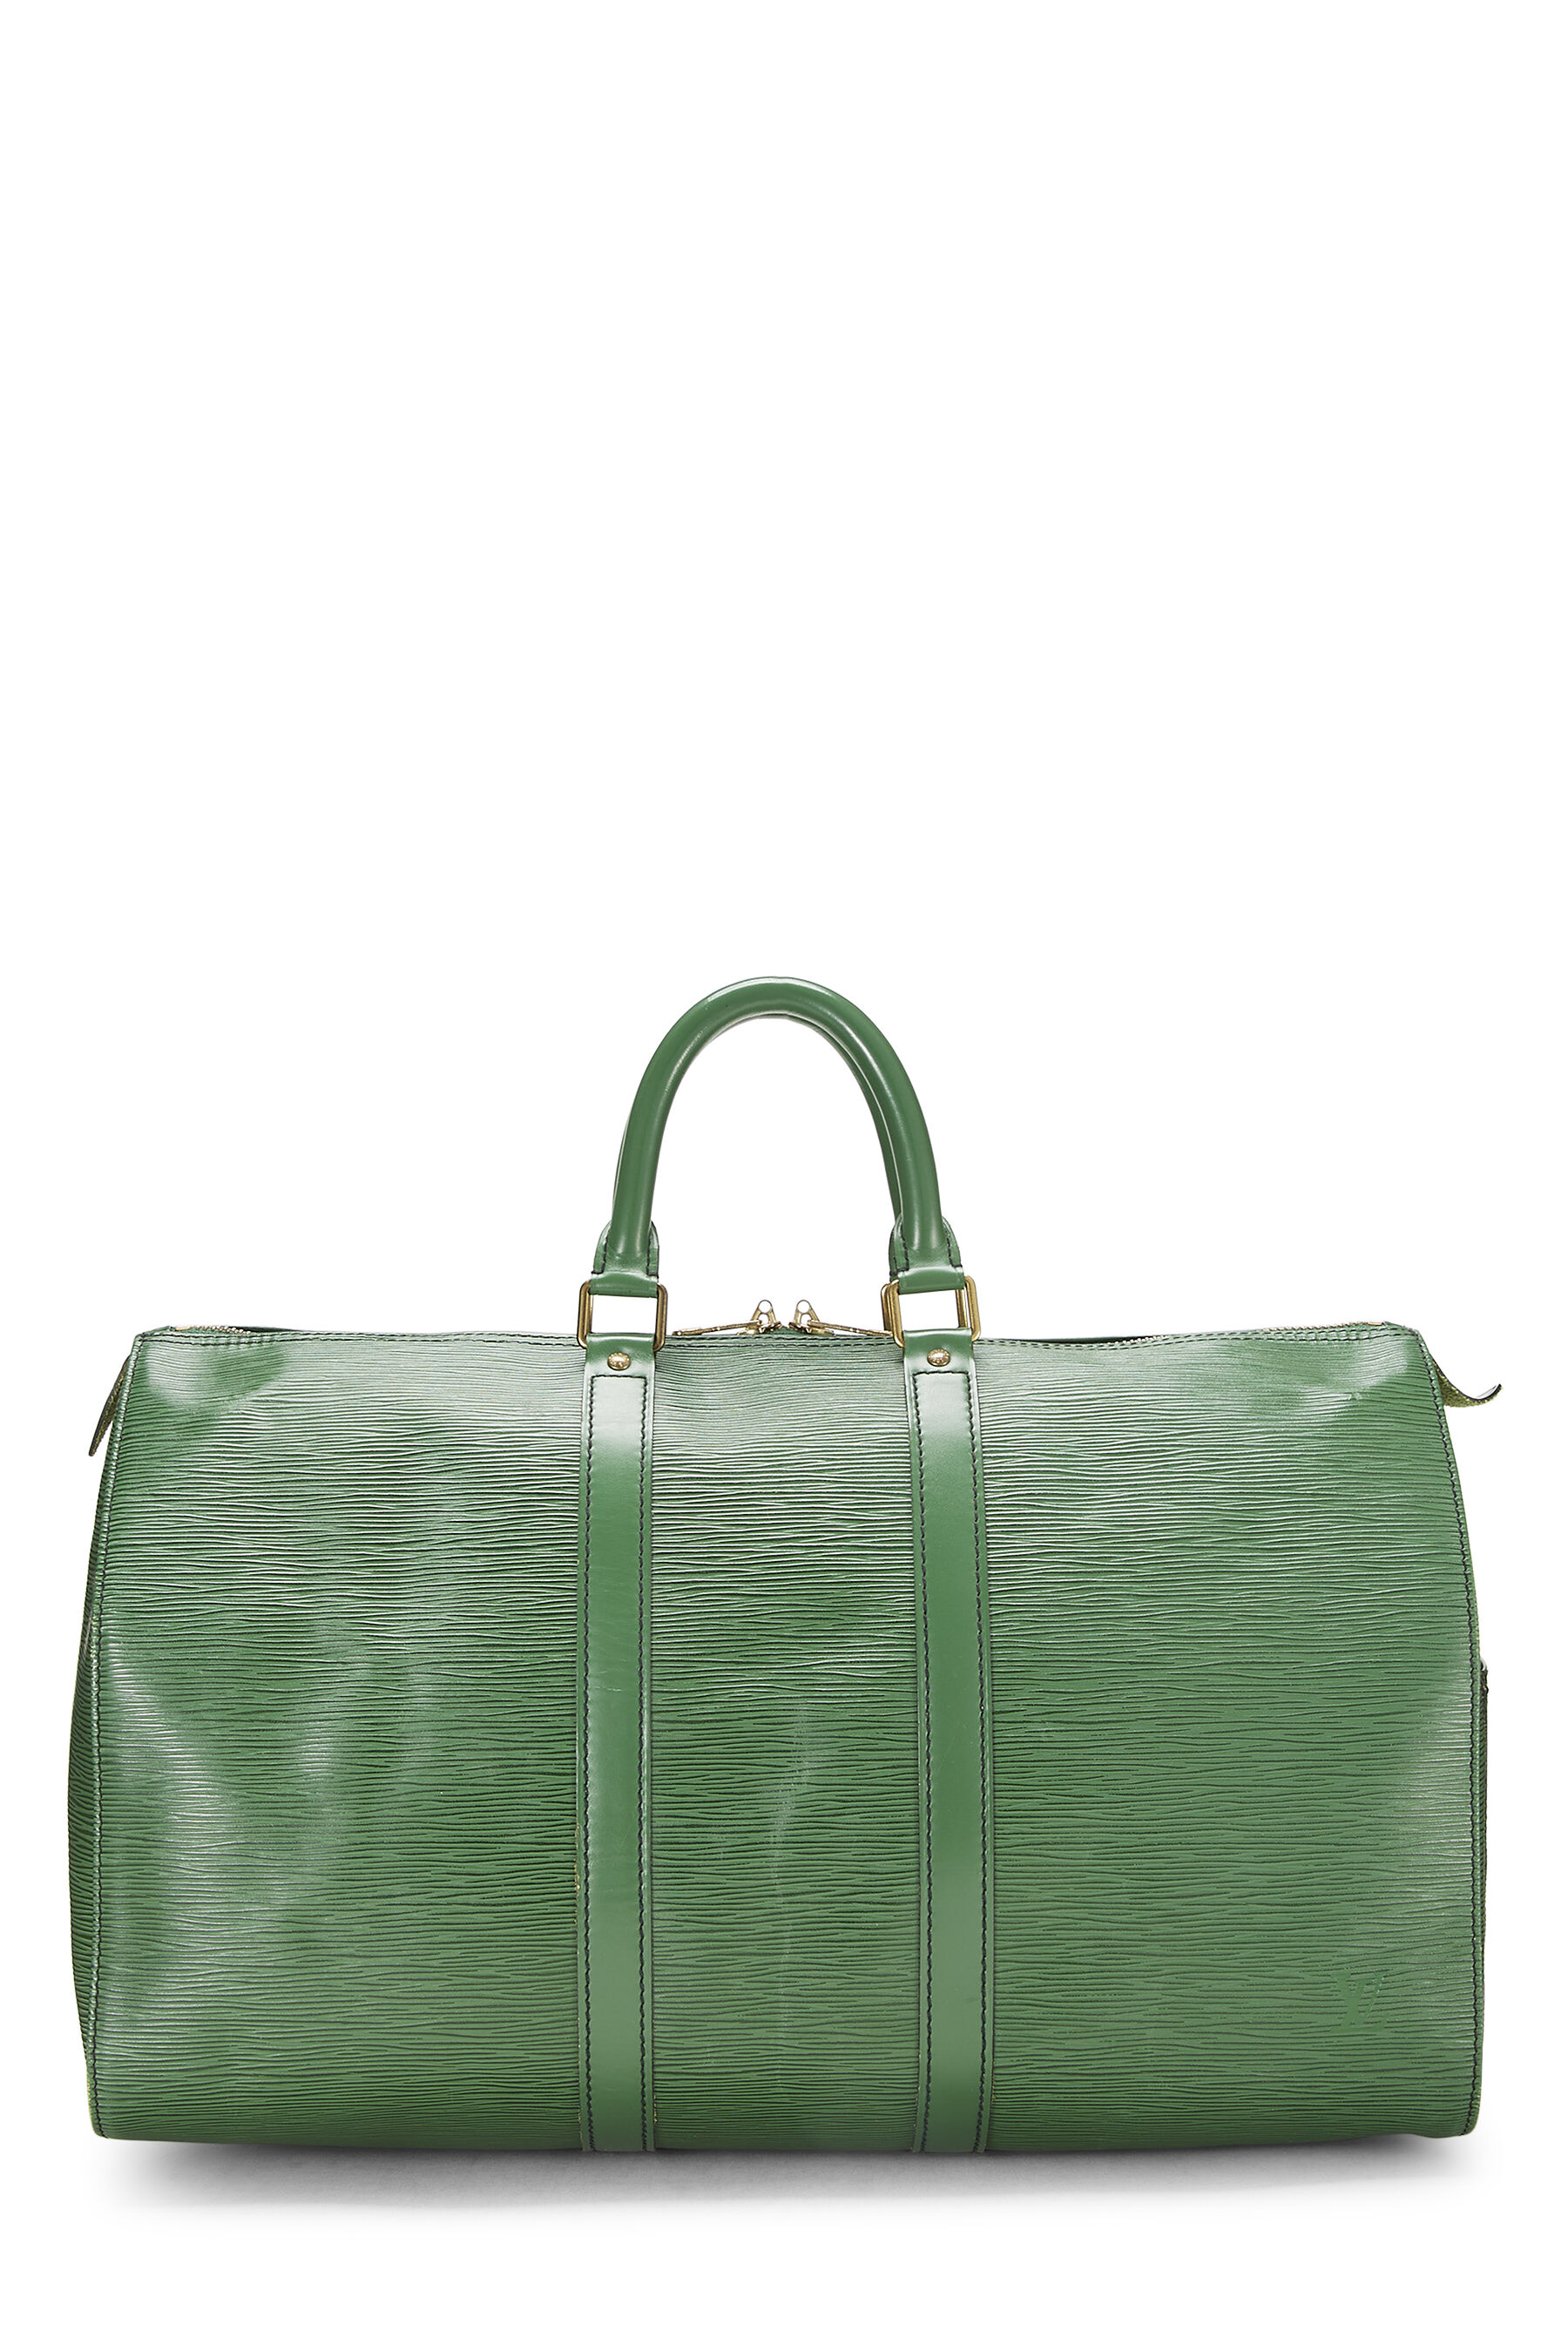 Louis Vuitton Keepall 50 Green EPI Leather Travel Bag